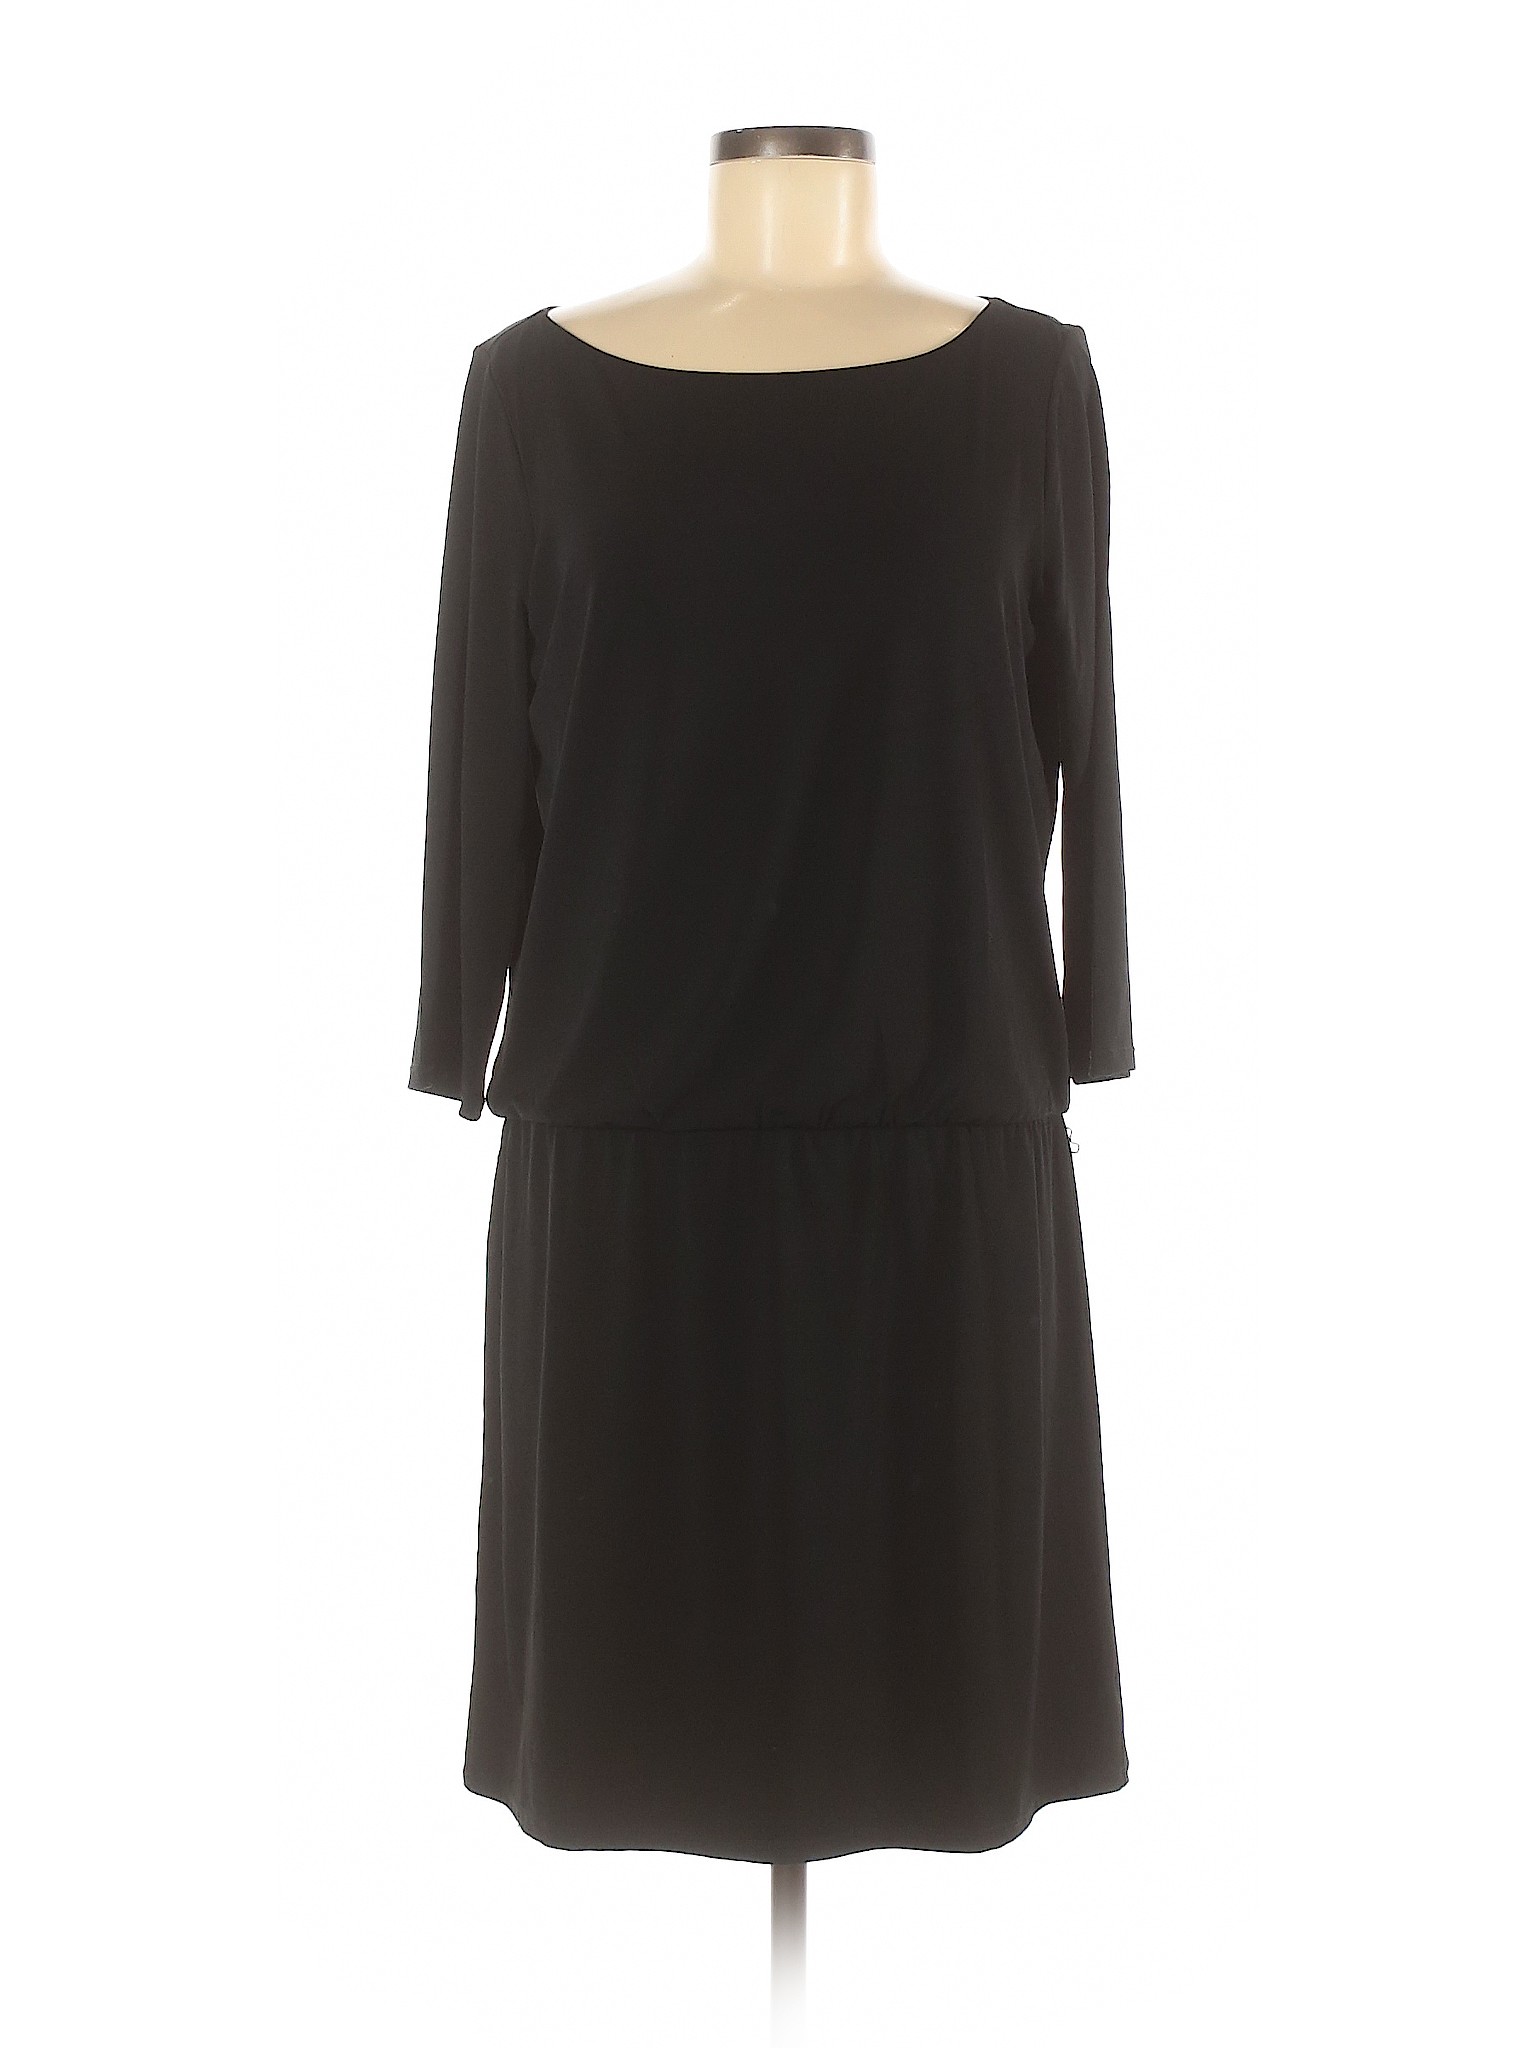 NWT White House Black Market Women Black Casual Dress M | eBay